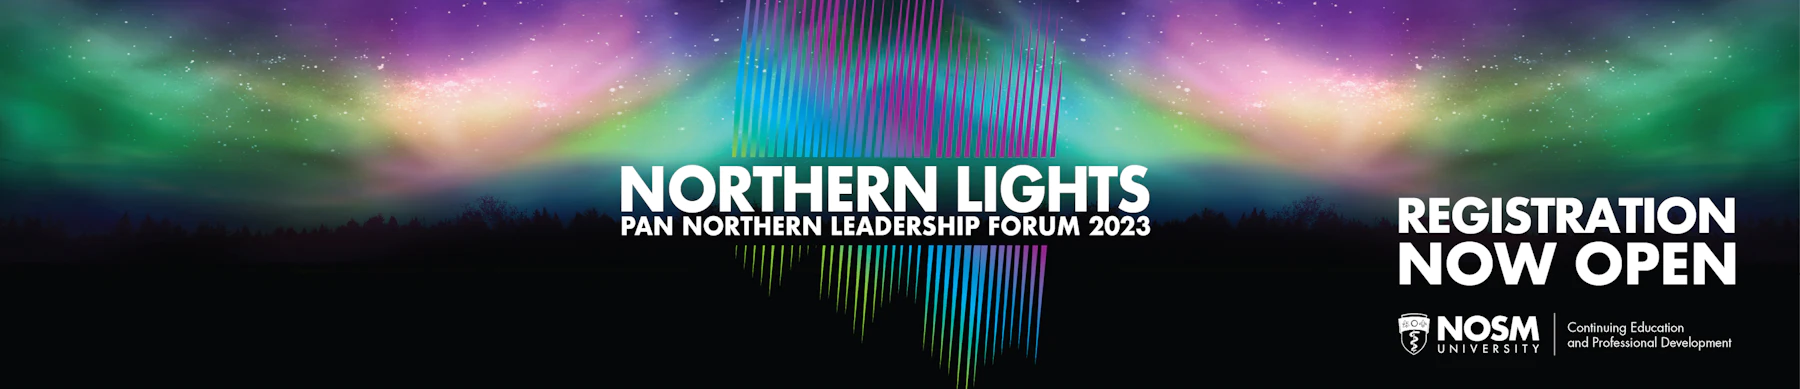 Northern Lights 2023: Registration Now Open